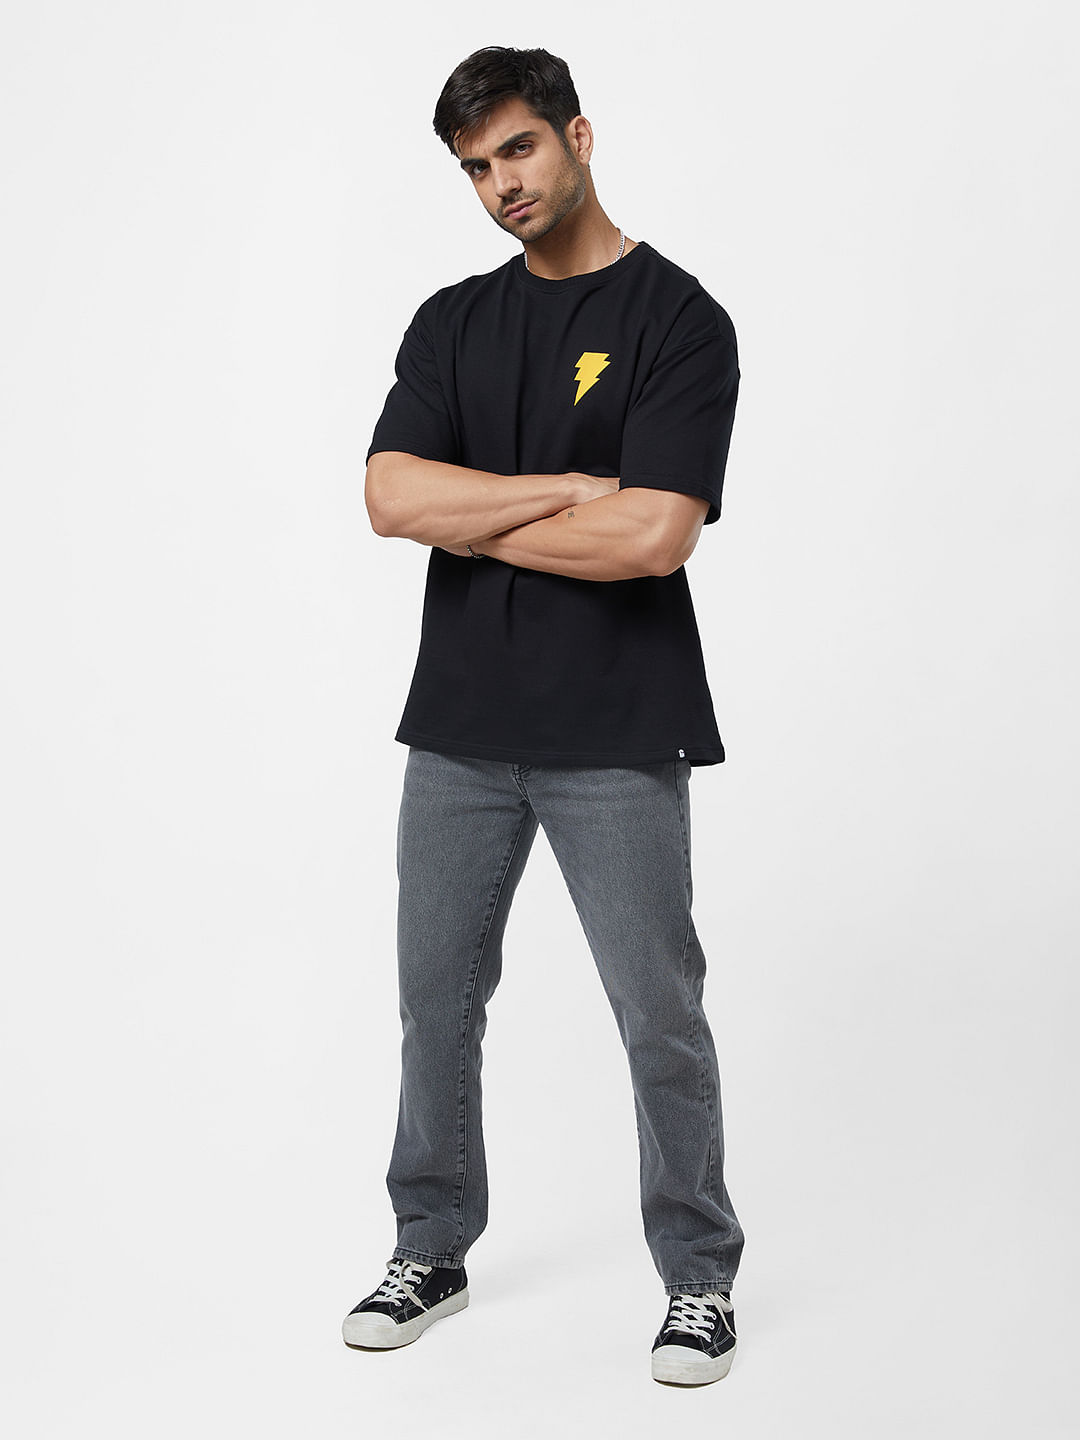 Buy Black Adam: Kahndaq Oversized T-shirts Online